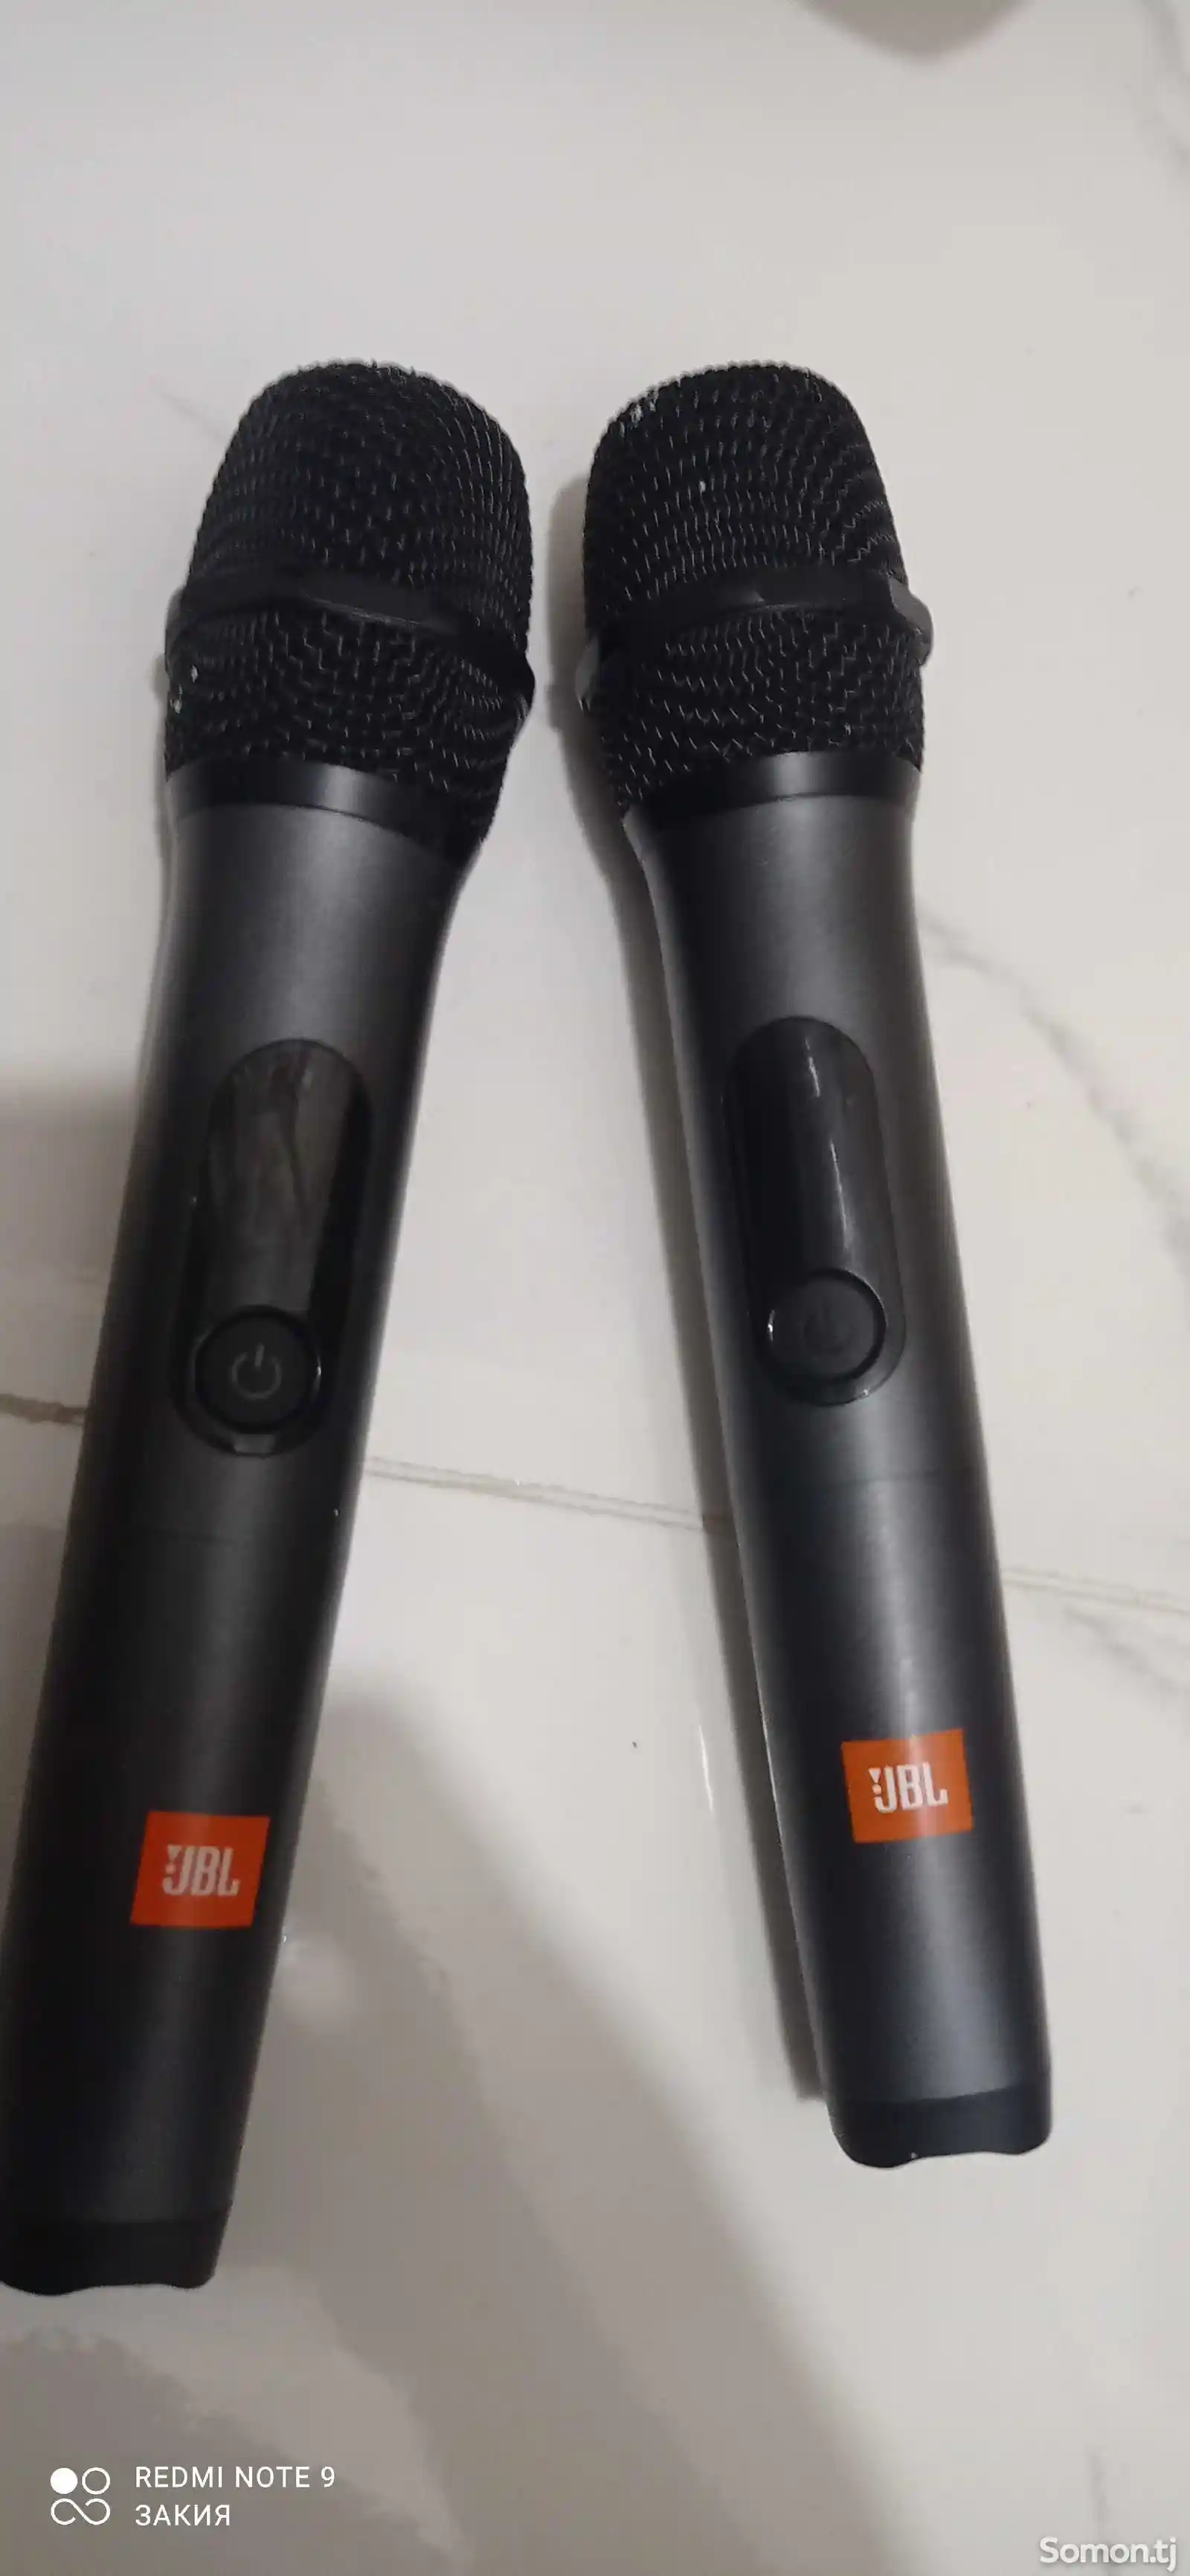 Микрофон JBL-3